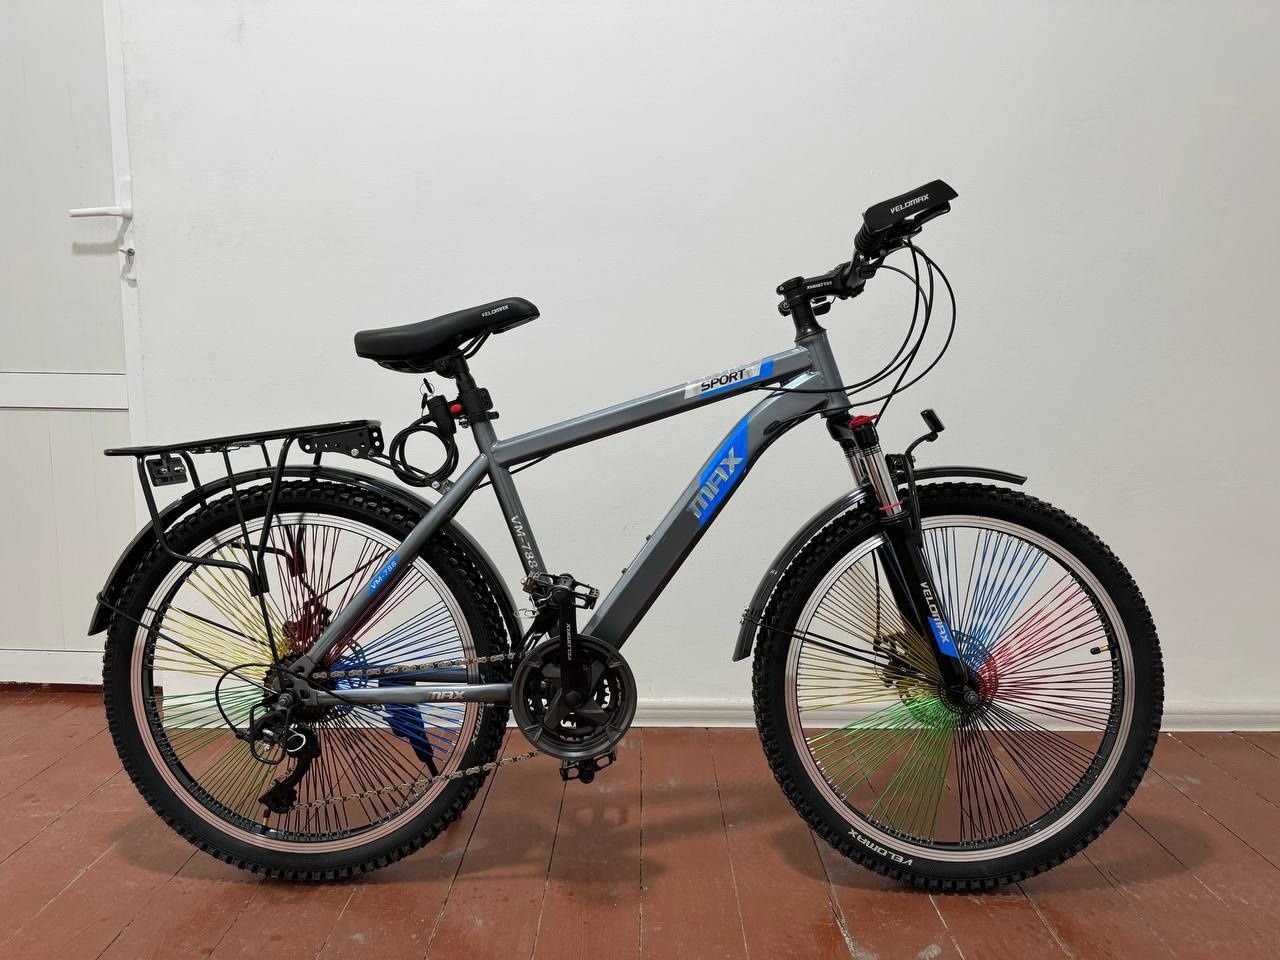 Велосипед велик 26 BMX спицалик оптом/дона